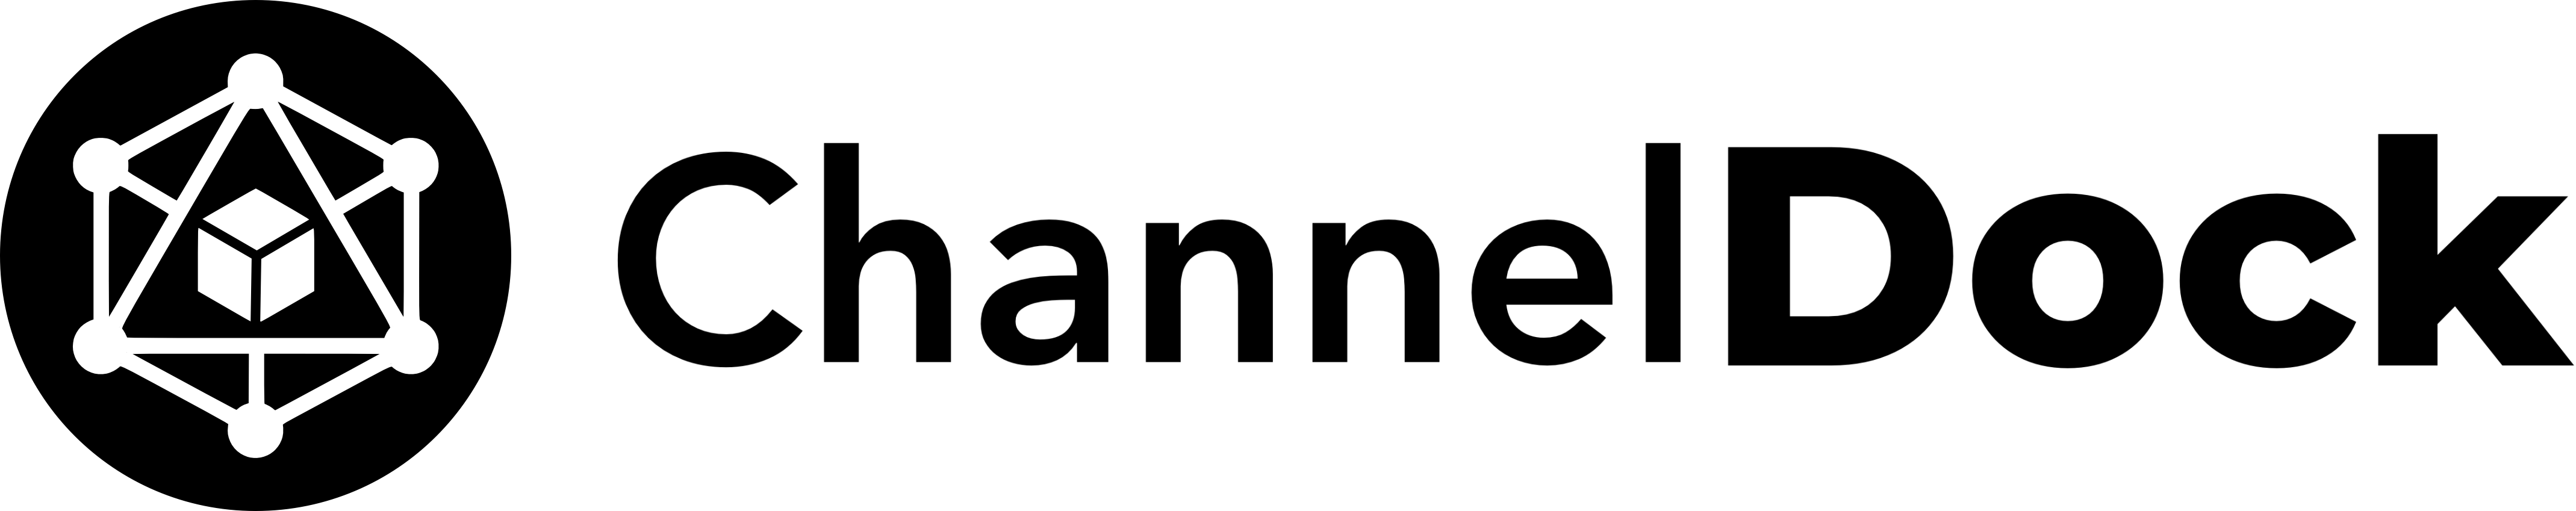 channeldock logo